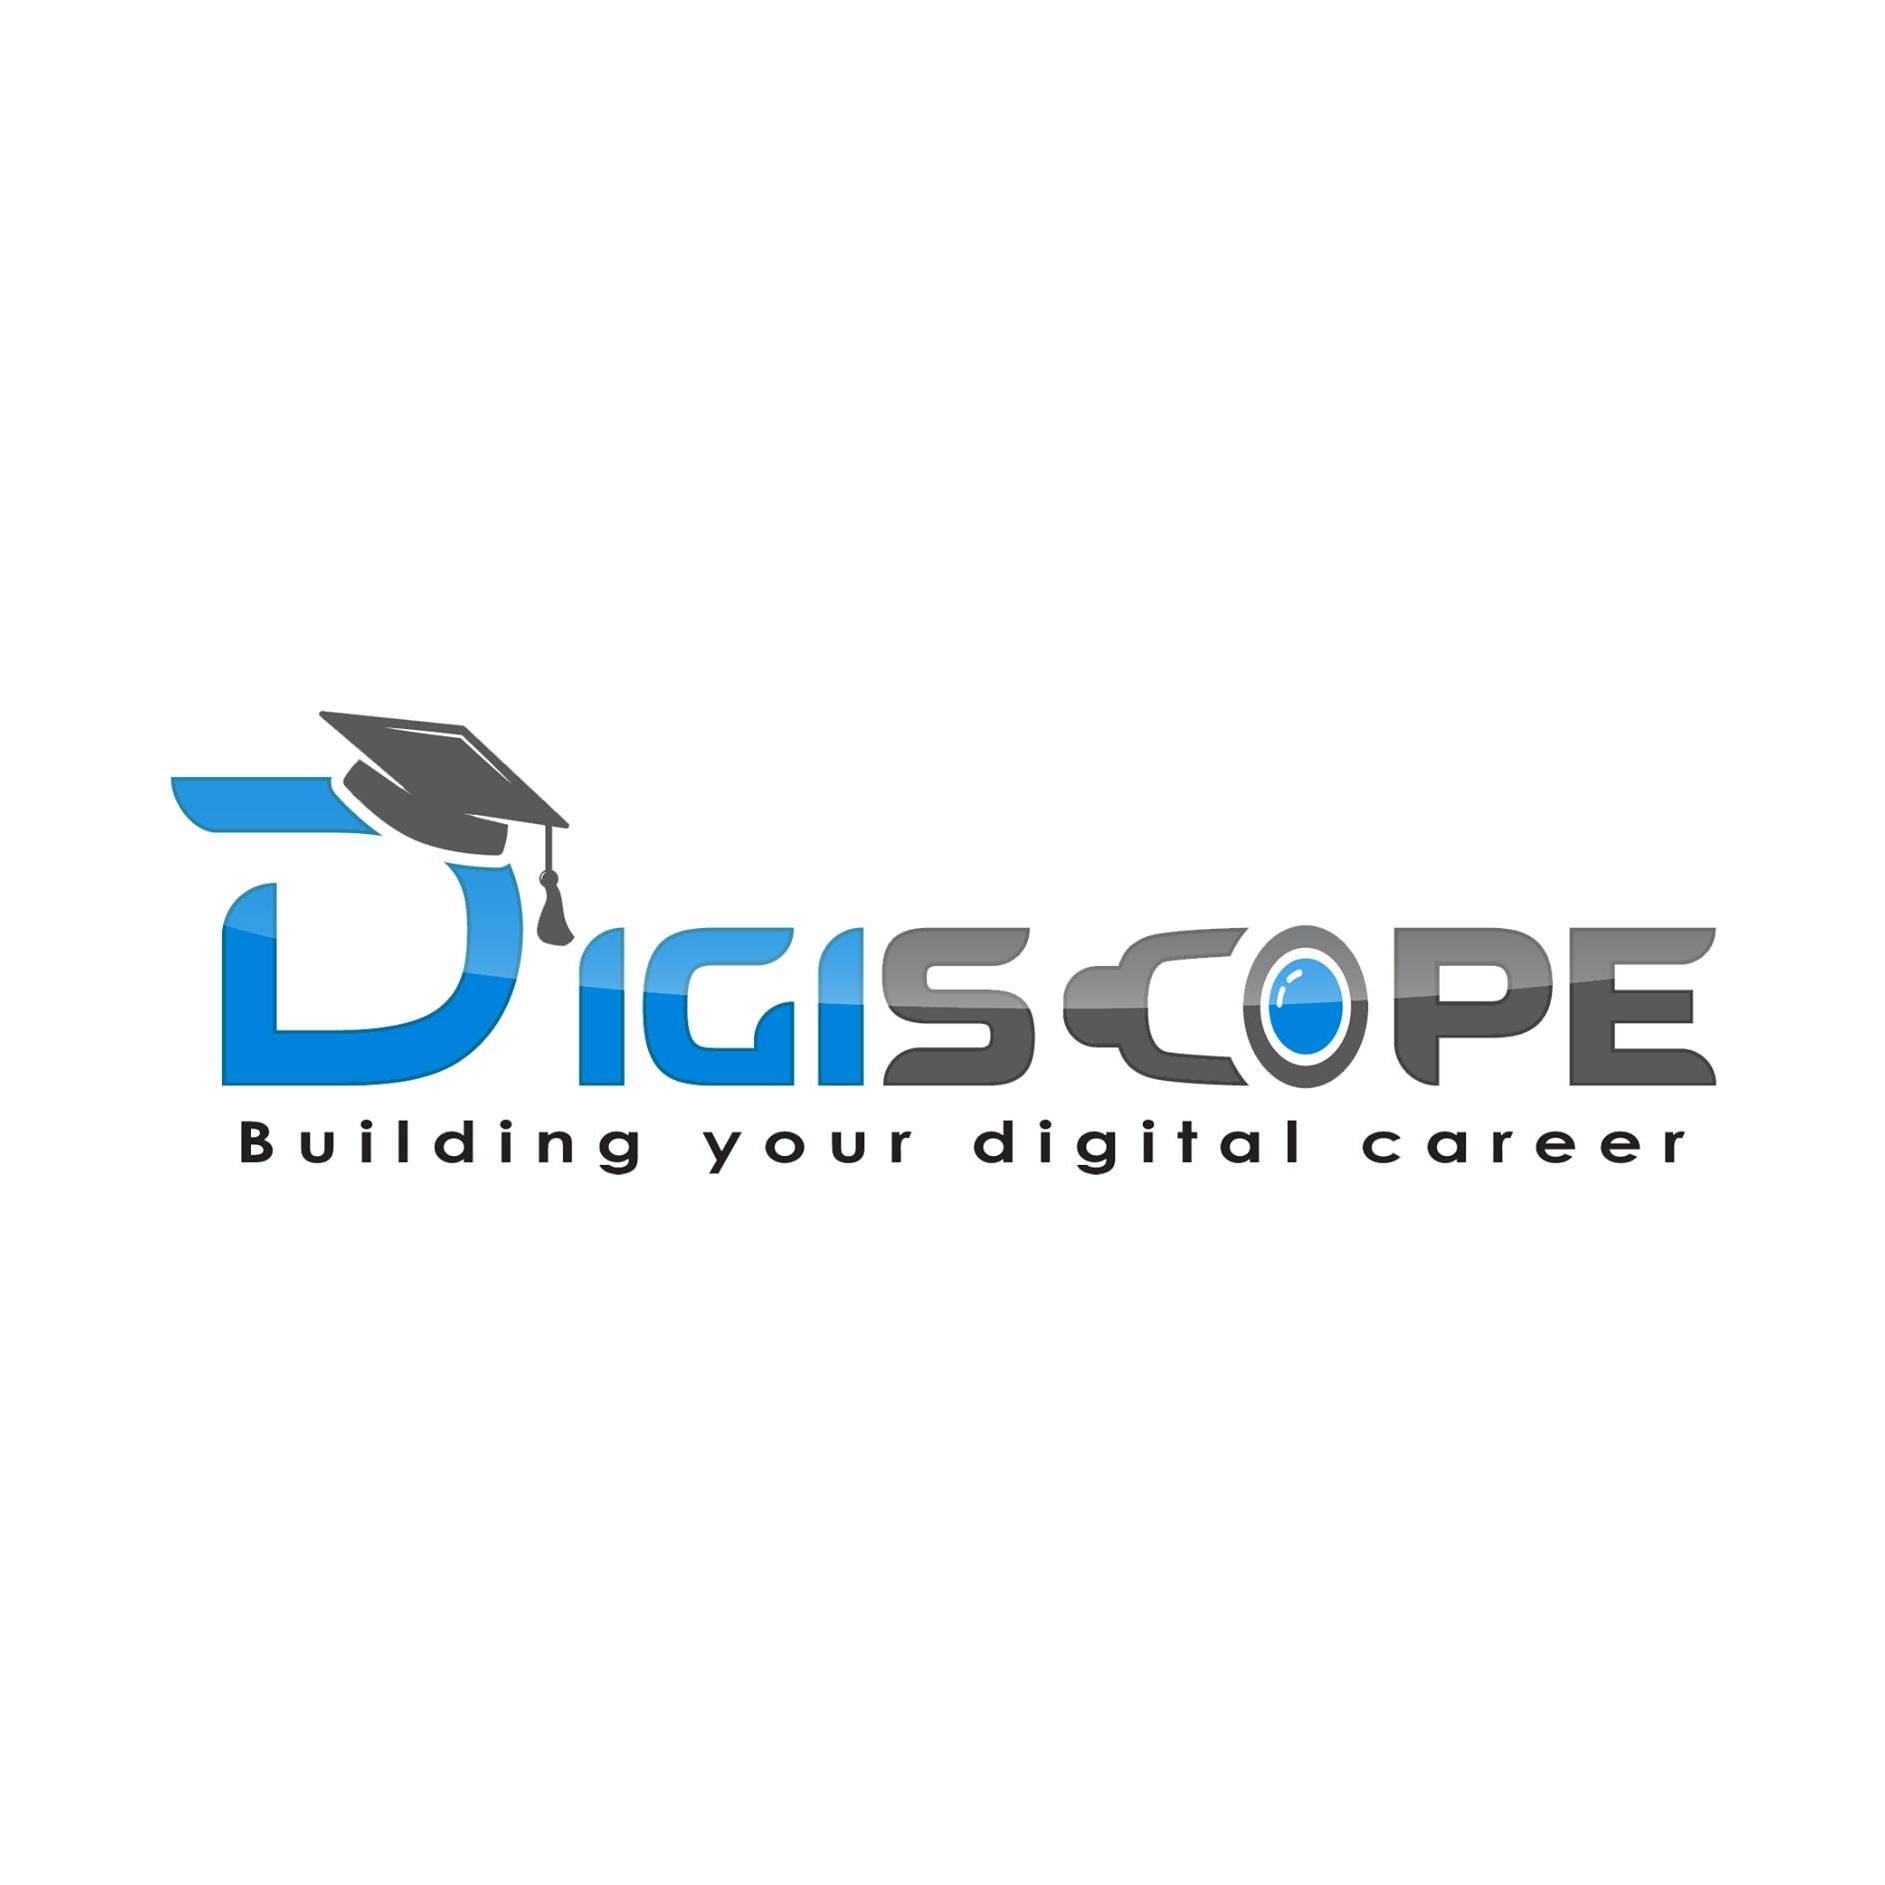 Digiscope